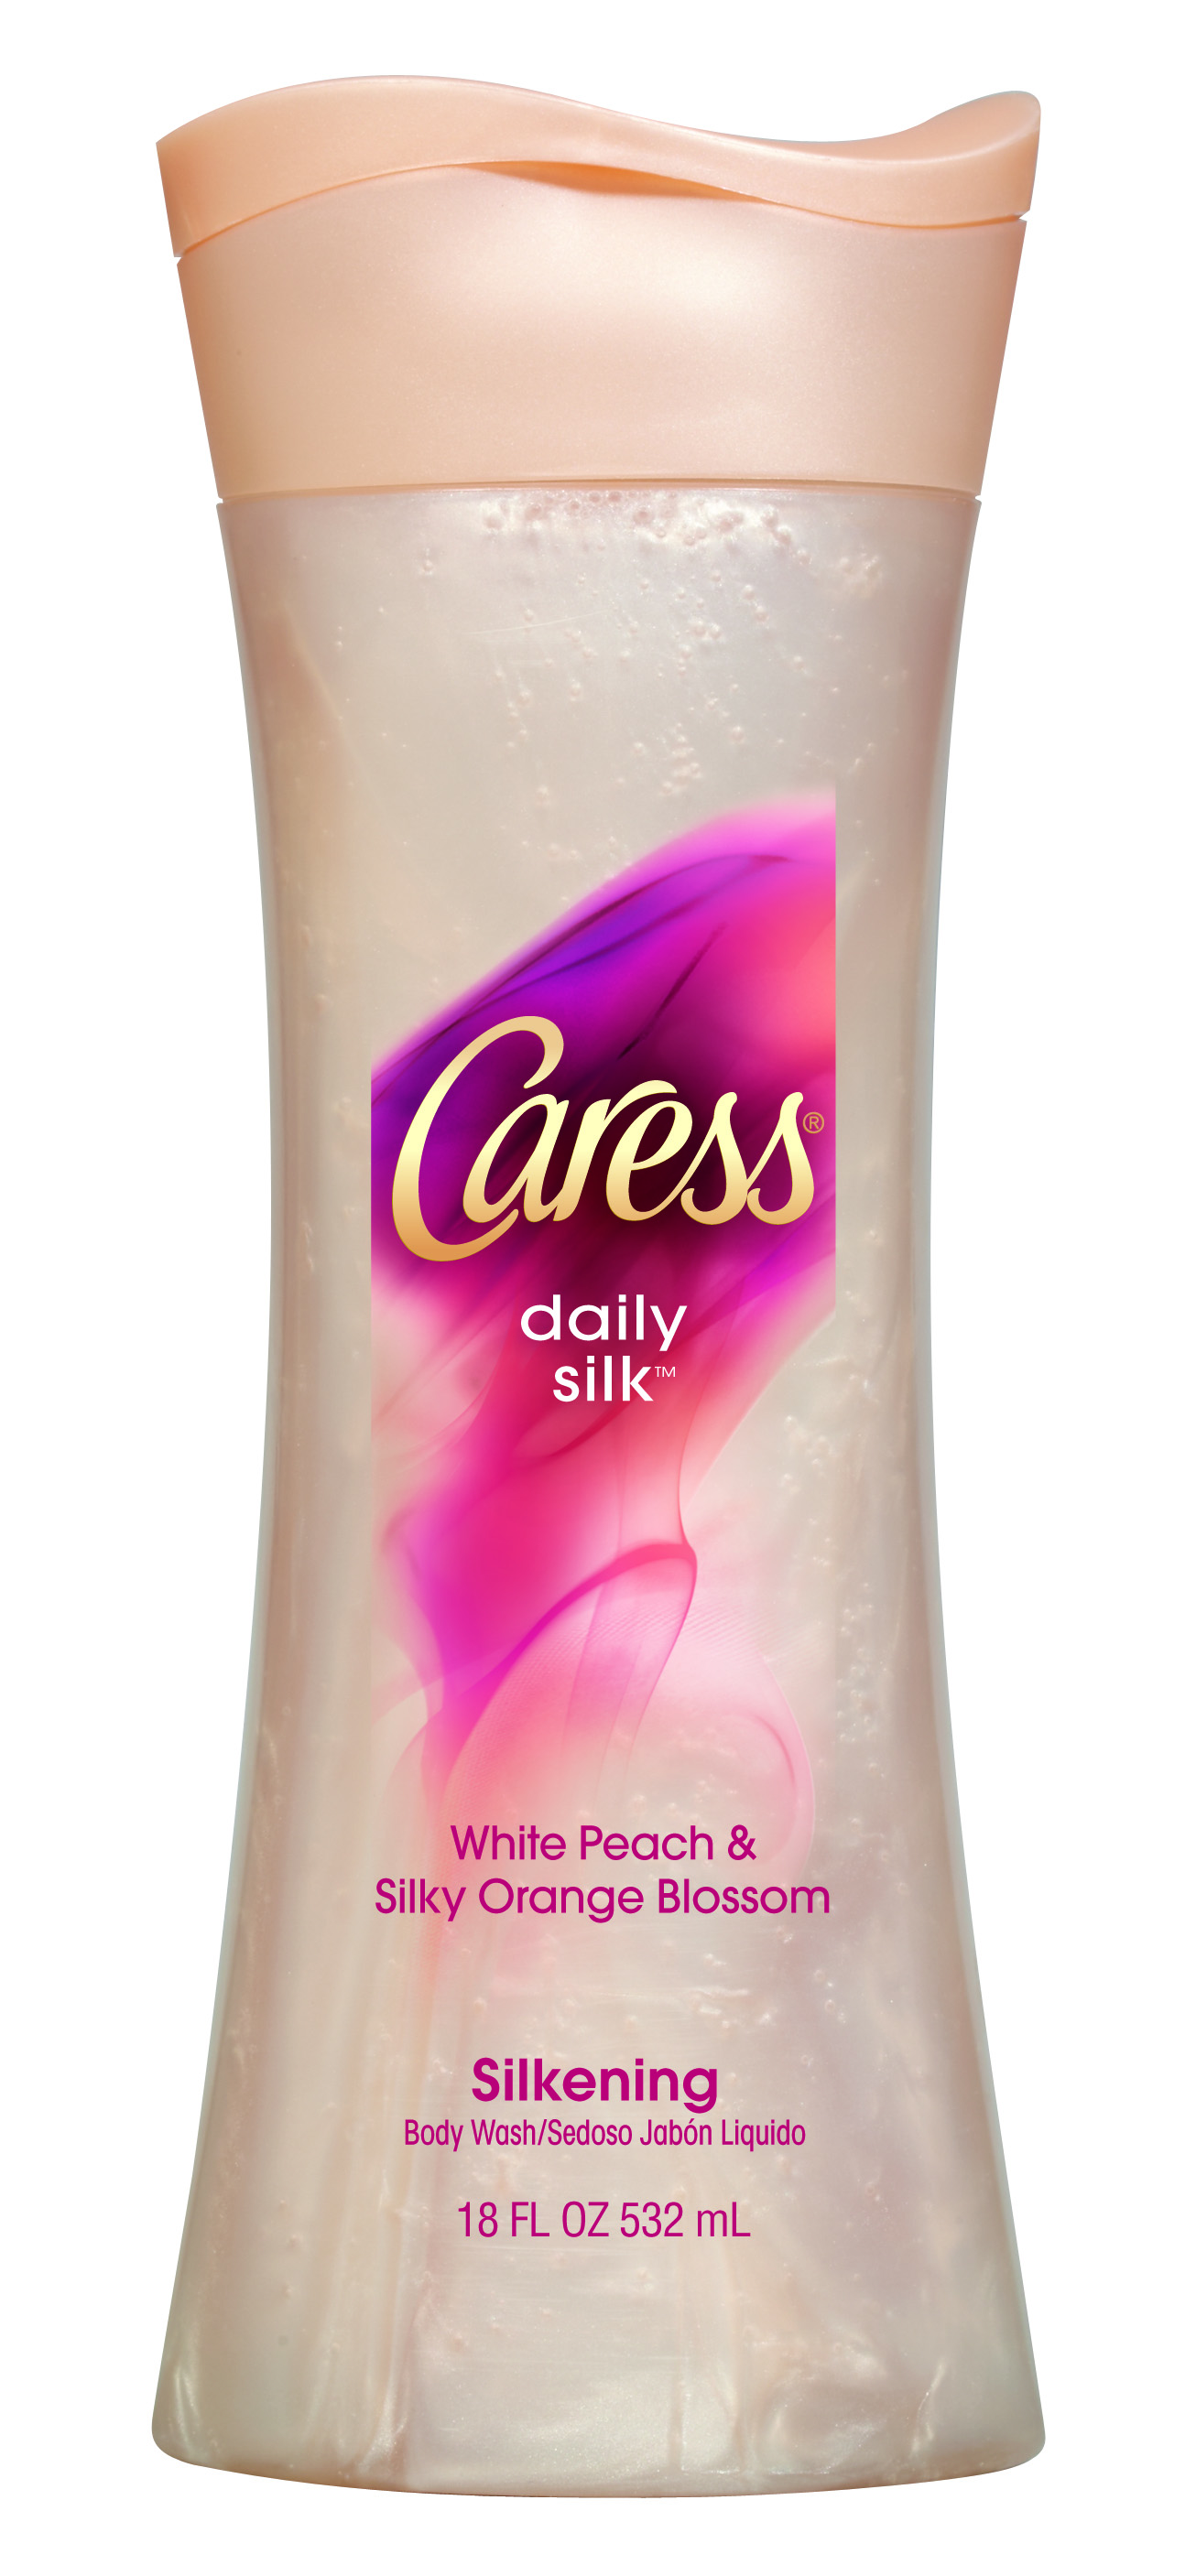 Caress Daily Silk Silkening Body Wash